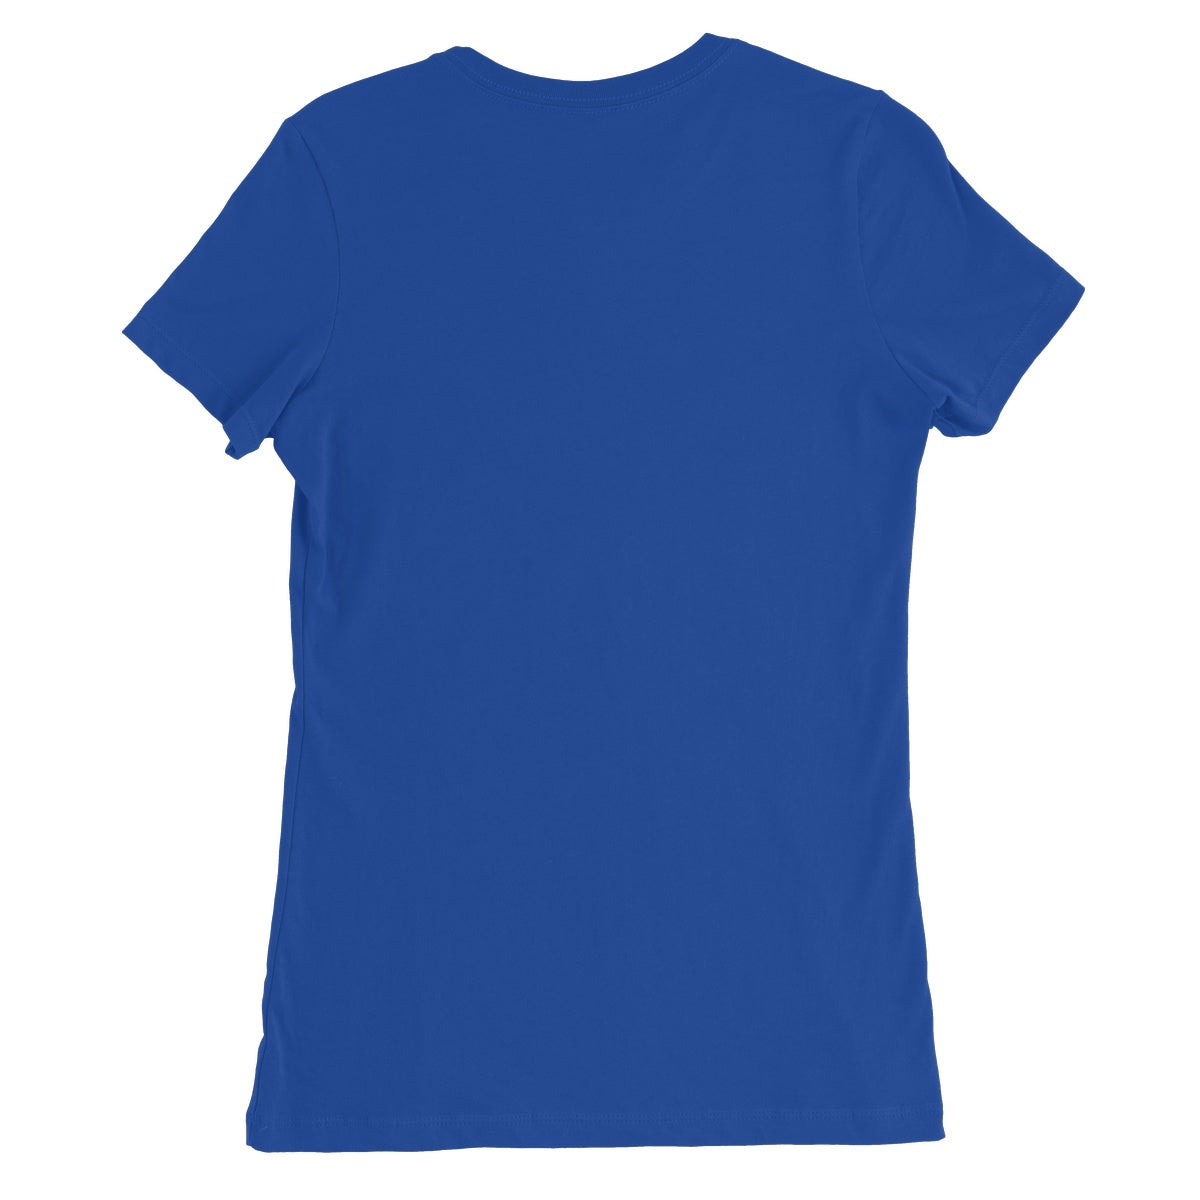 Bound For Glory 2020 - Ken Shamrock Women's Favourite T-Shirt